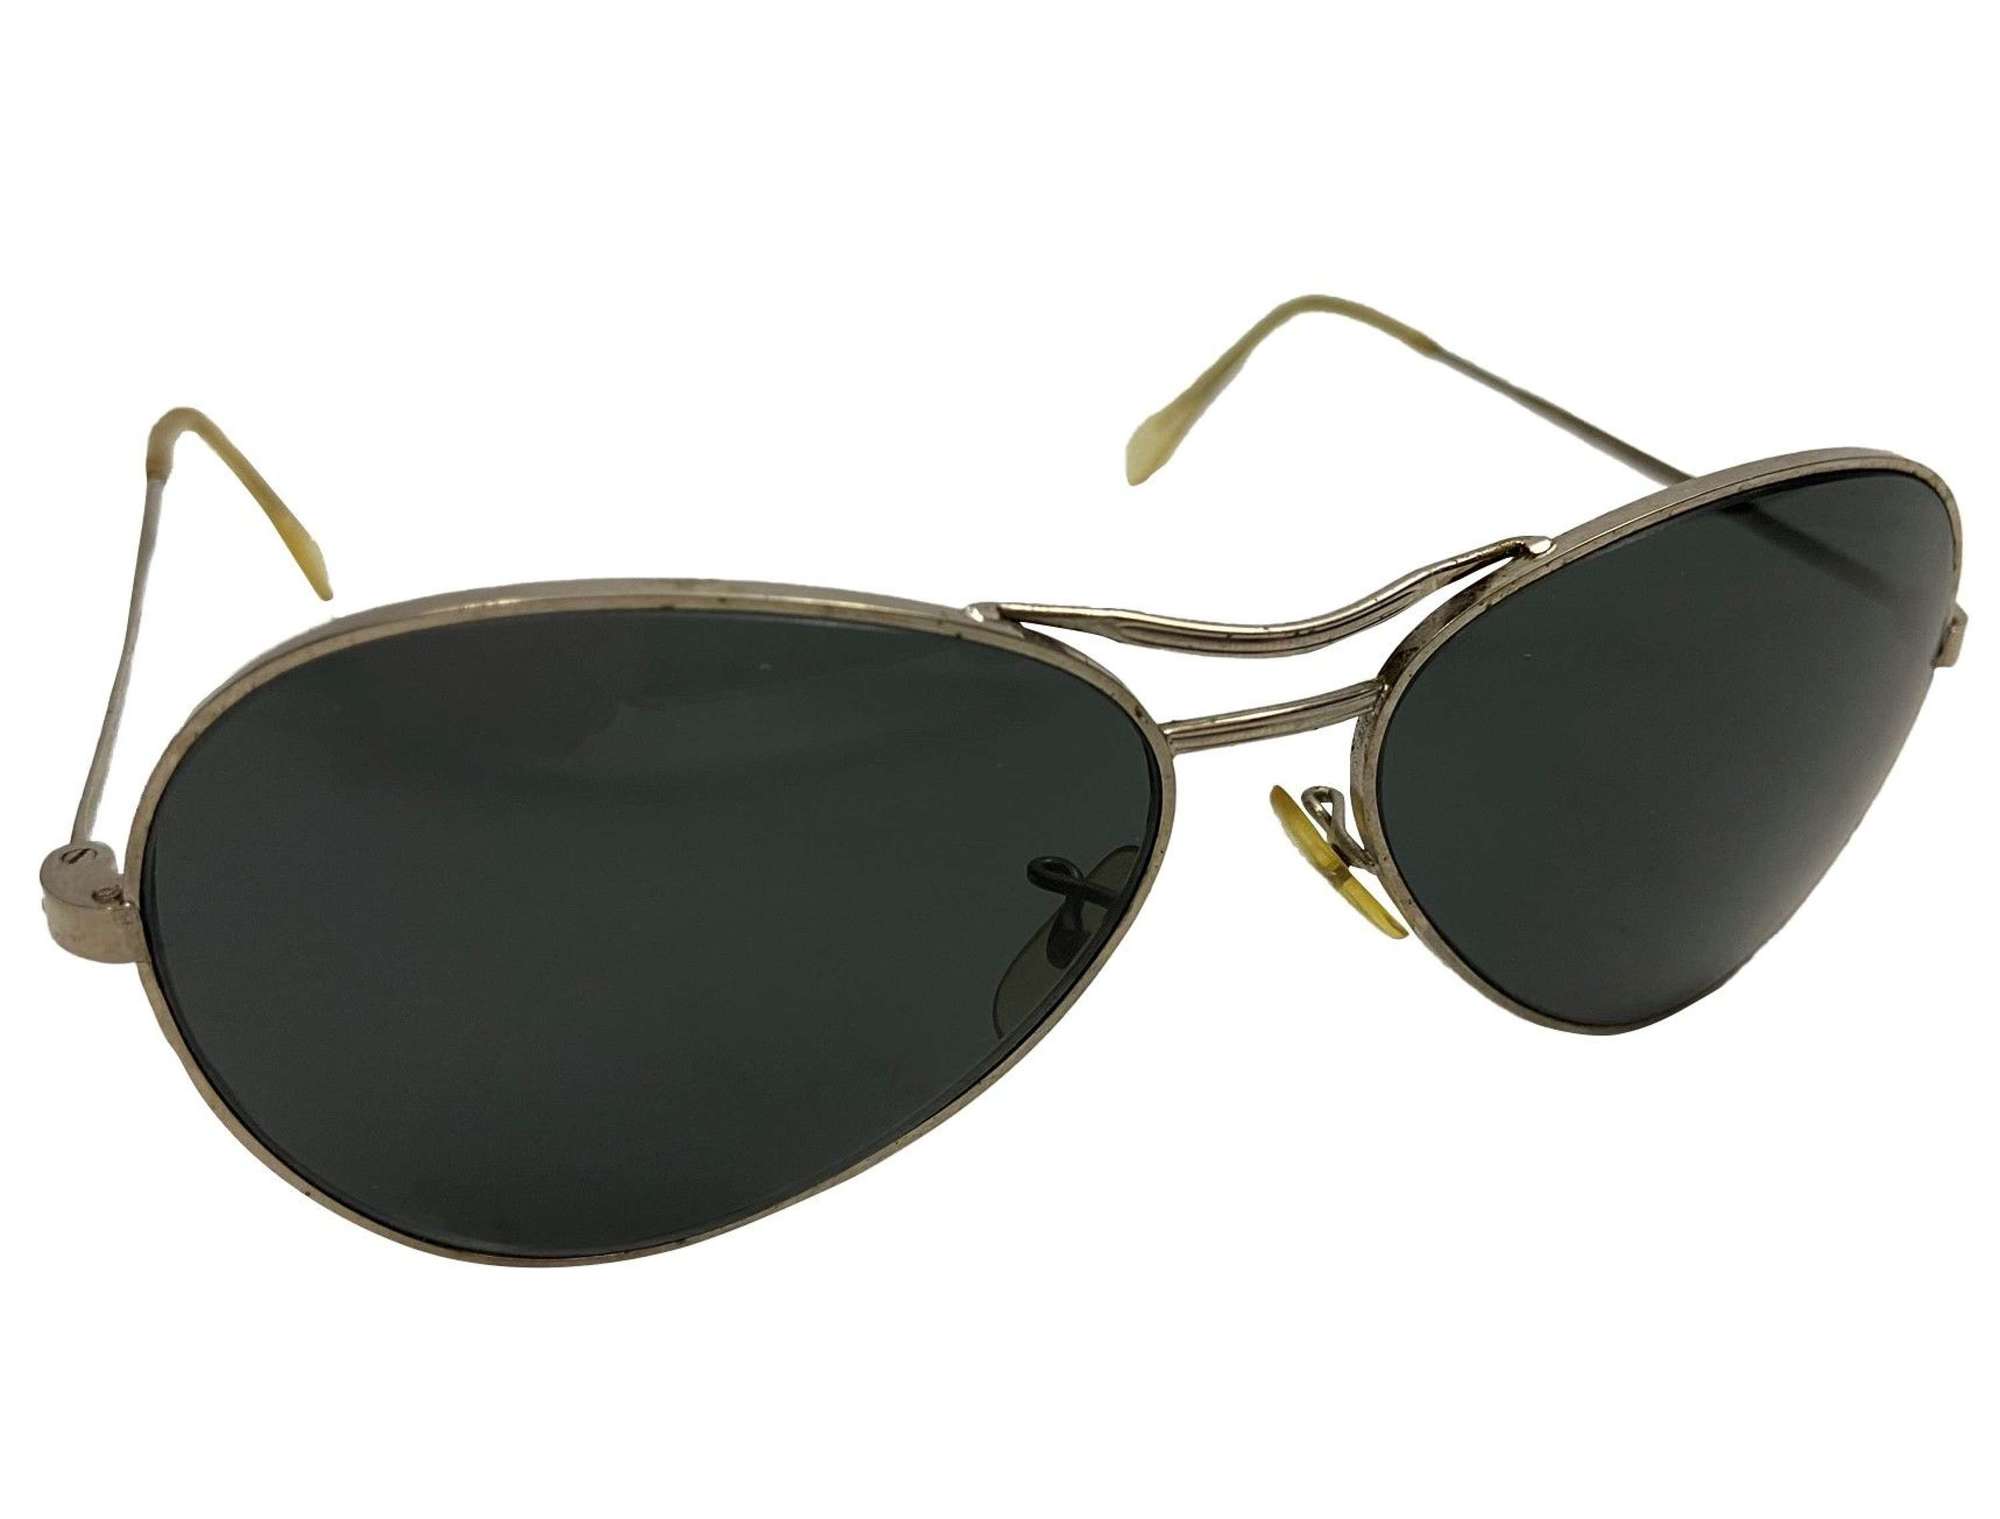 Original 1950s RAK MK 14 Sunglasses